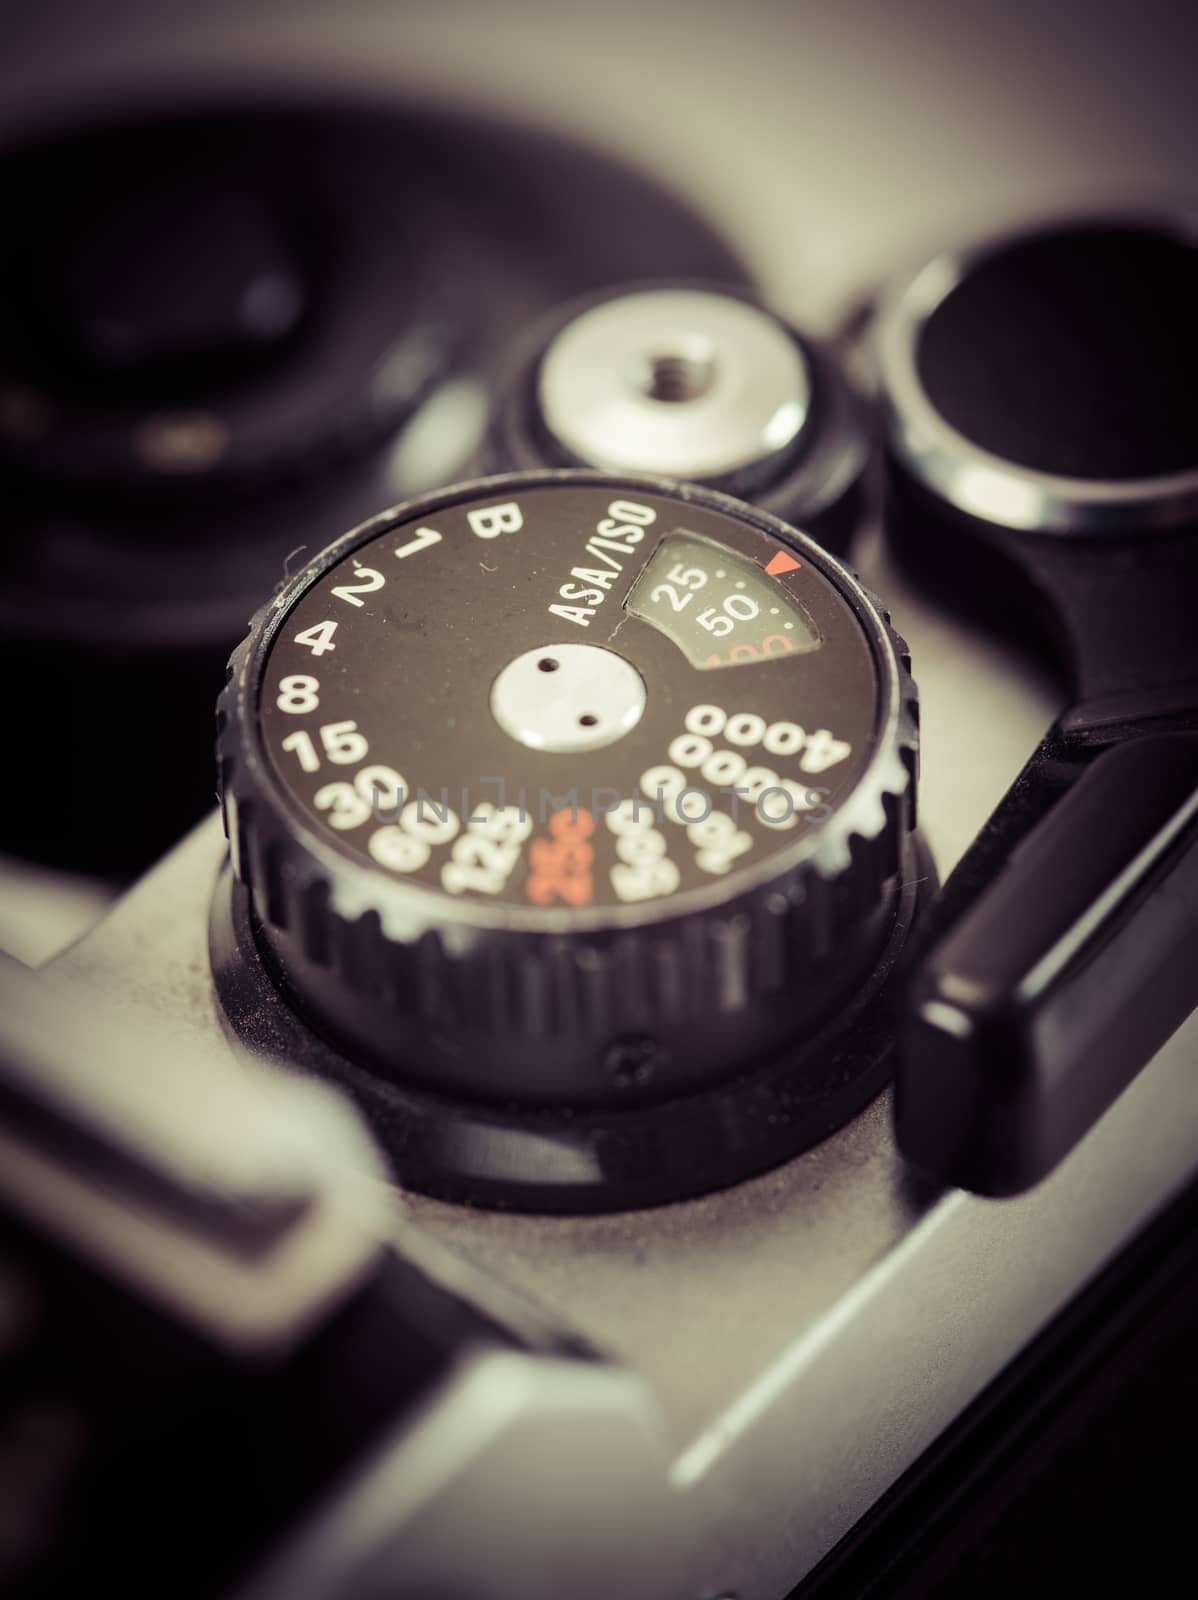 Vintage camera knob by sumners